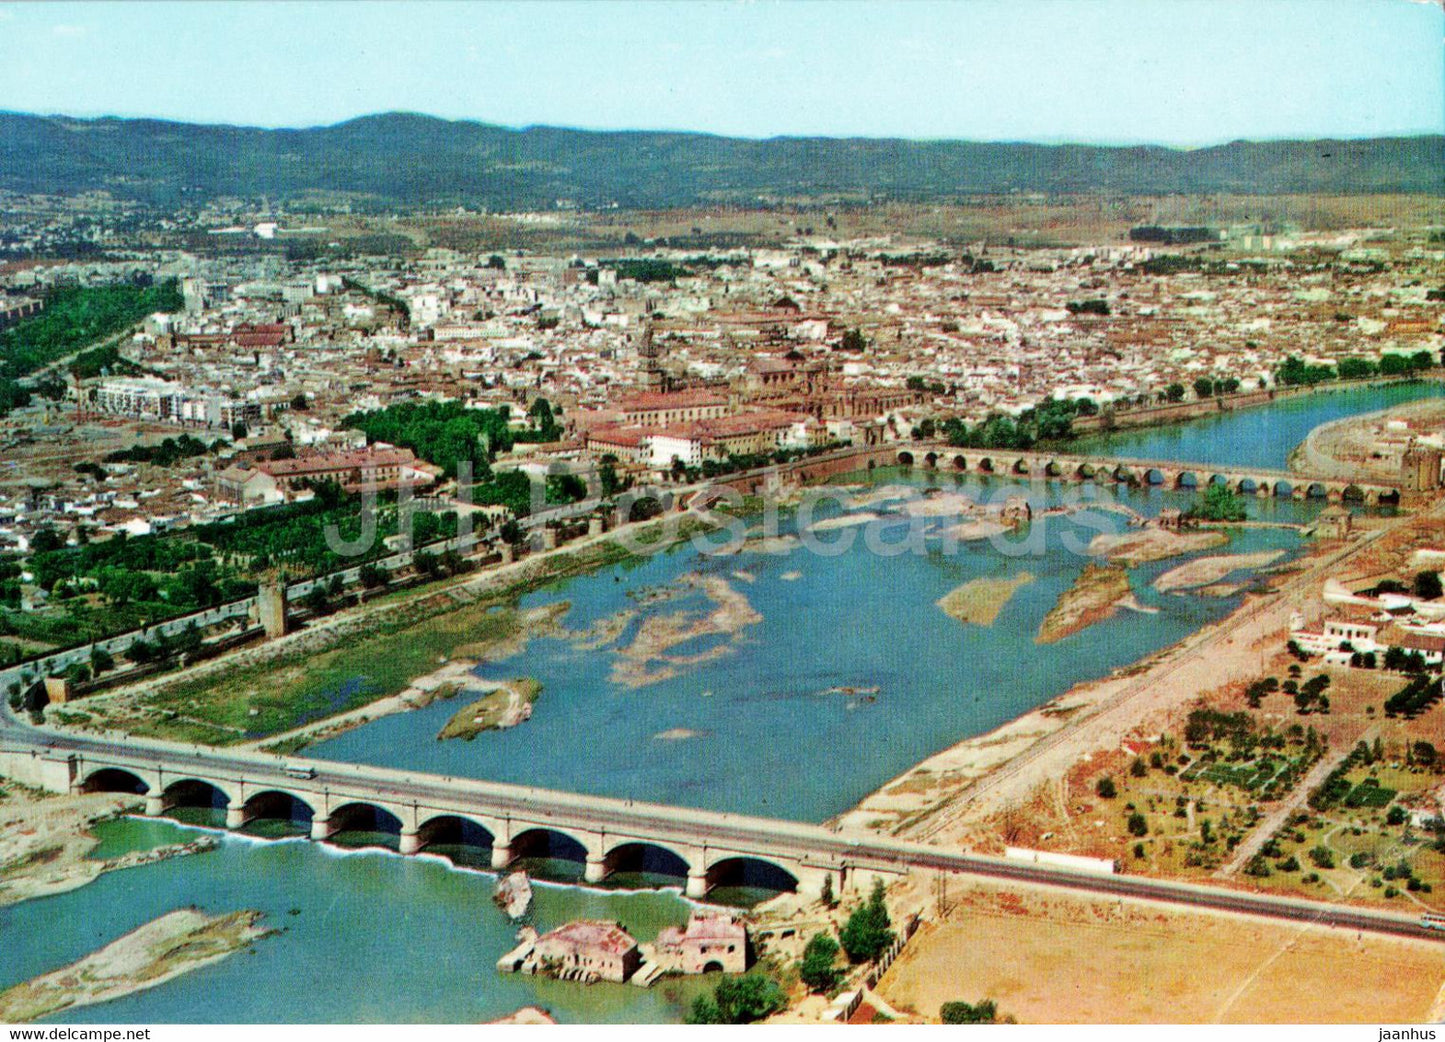 Cordoba - Vista Aerea - Aerial view - bridge - 254 - Spain - unused - JH Postcards